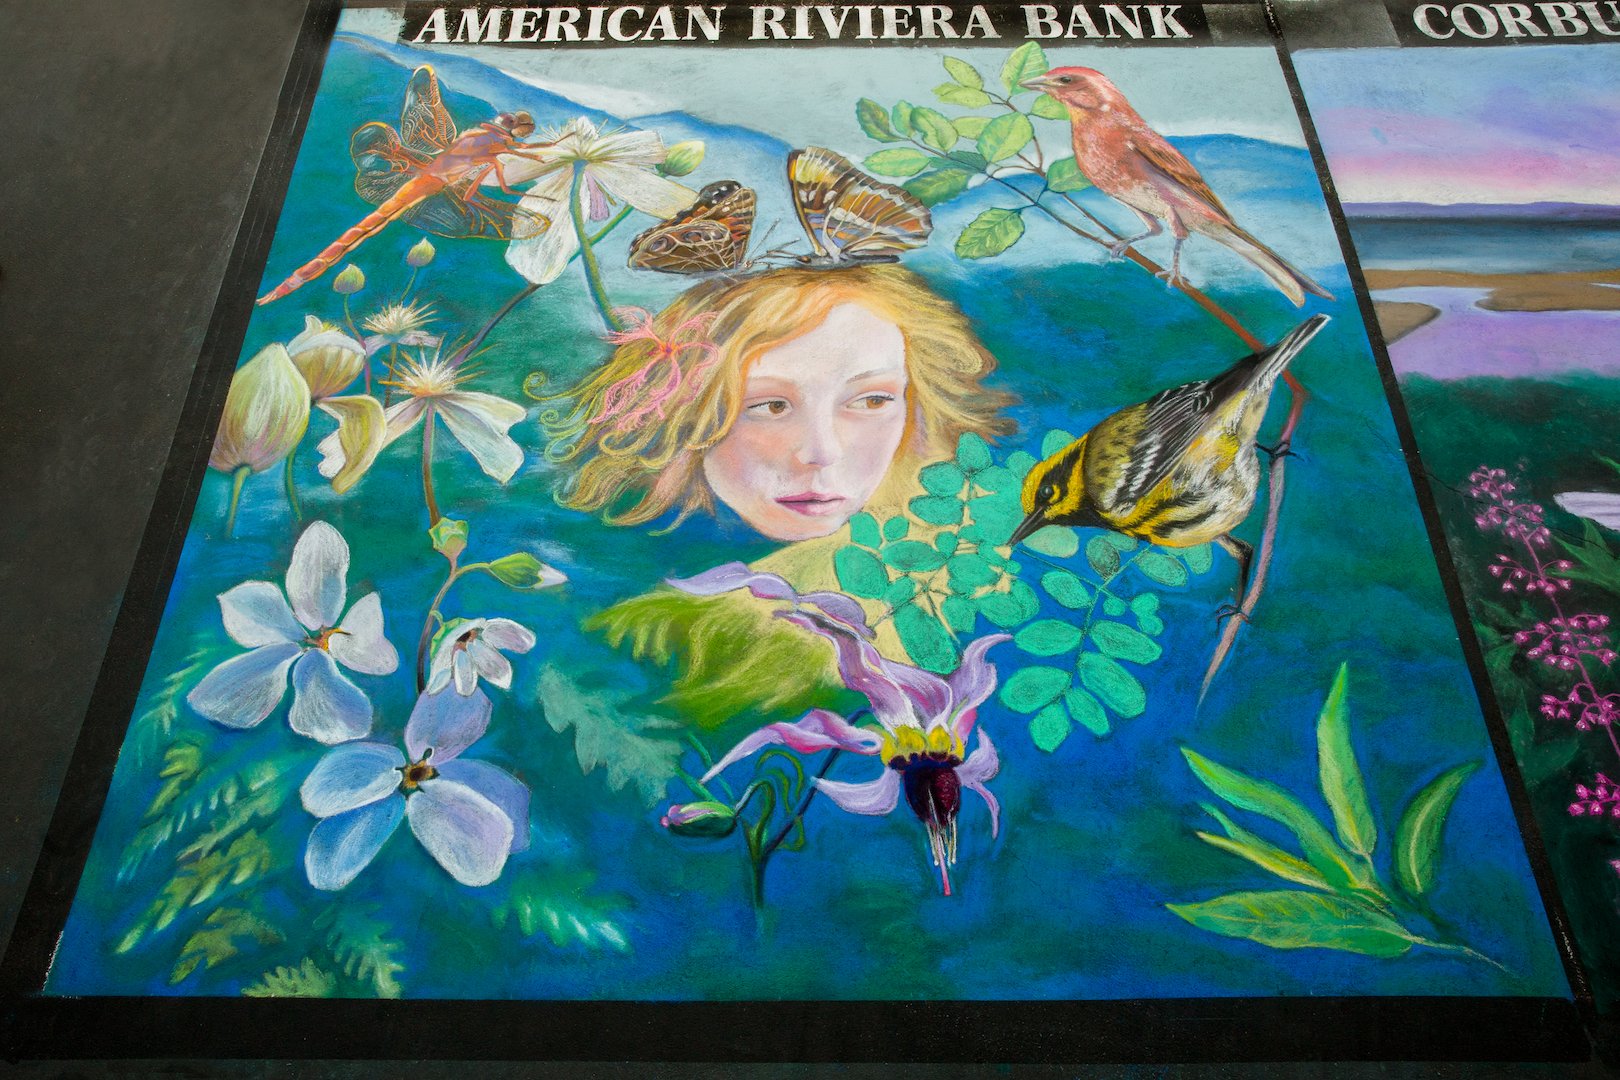  American Riviera Bank  Artist:  Jessie Altstatt 